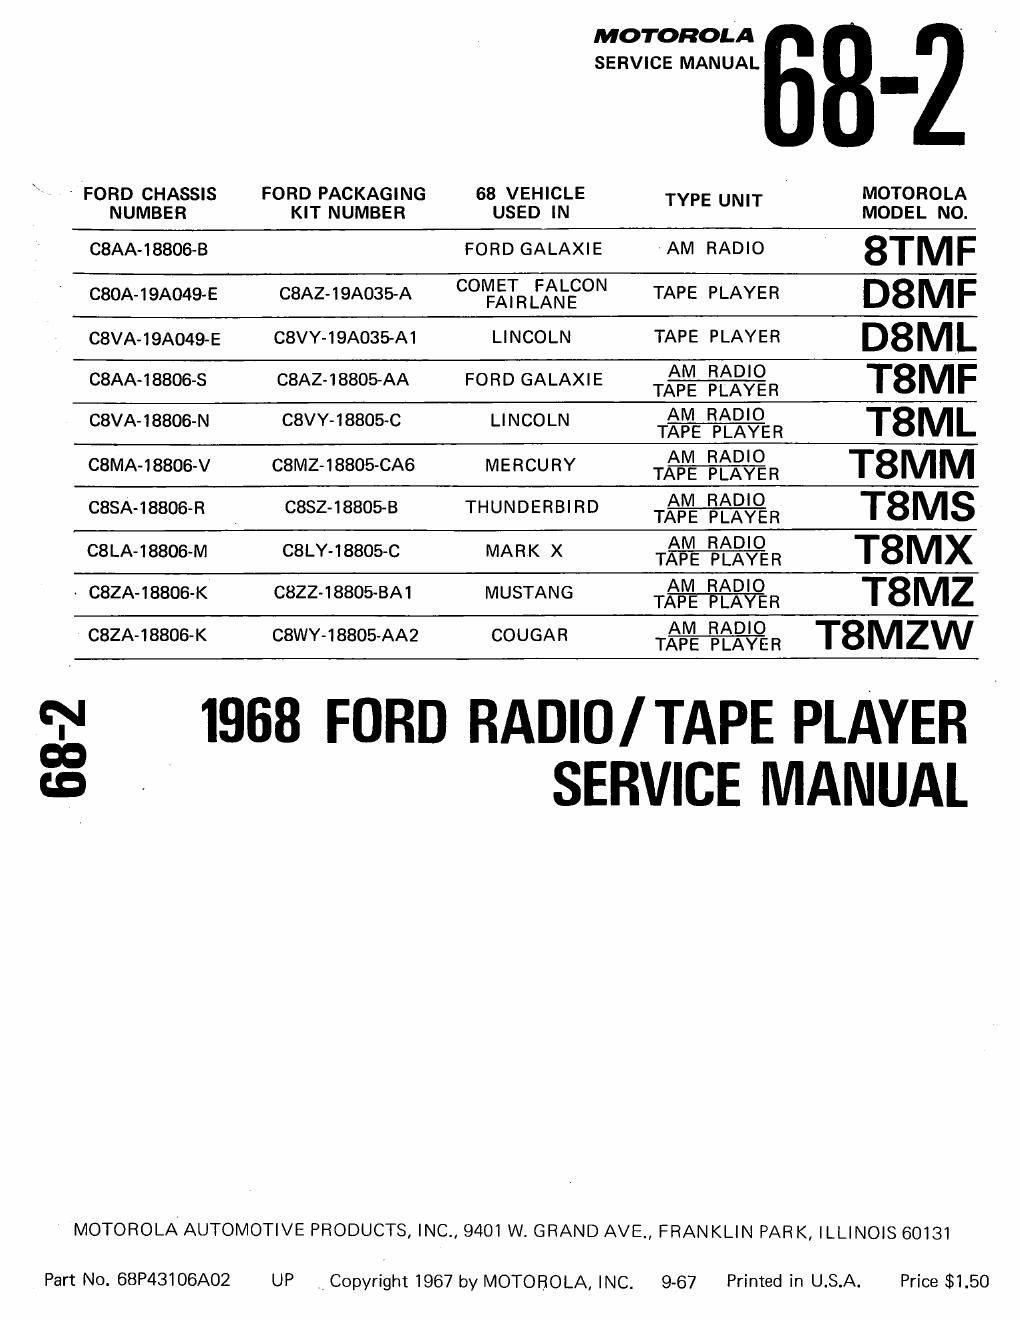 motorola 8 tmf service manual